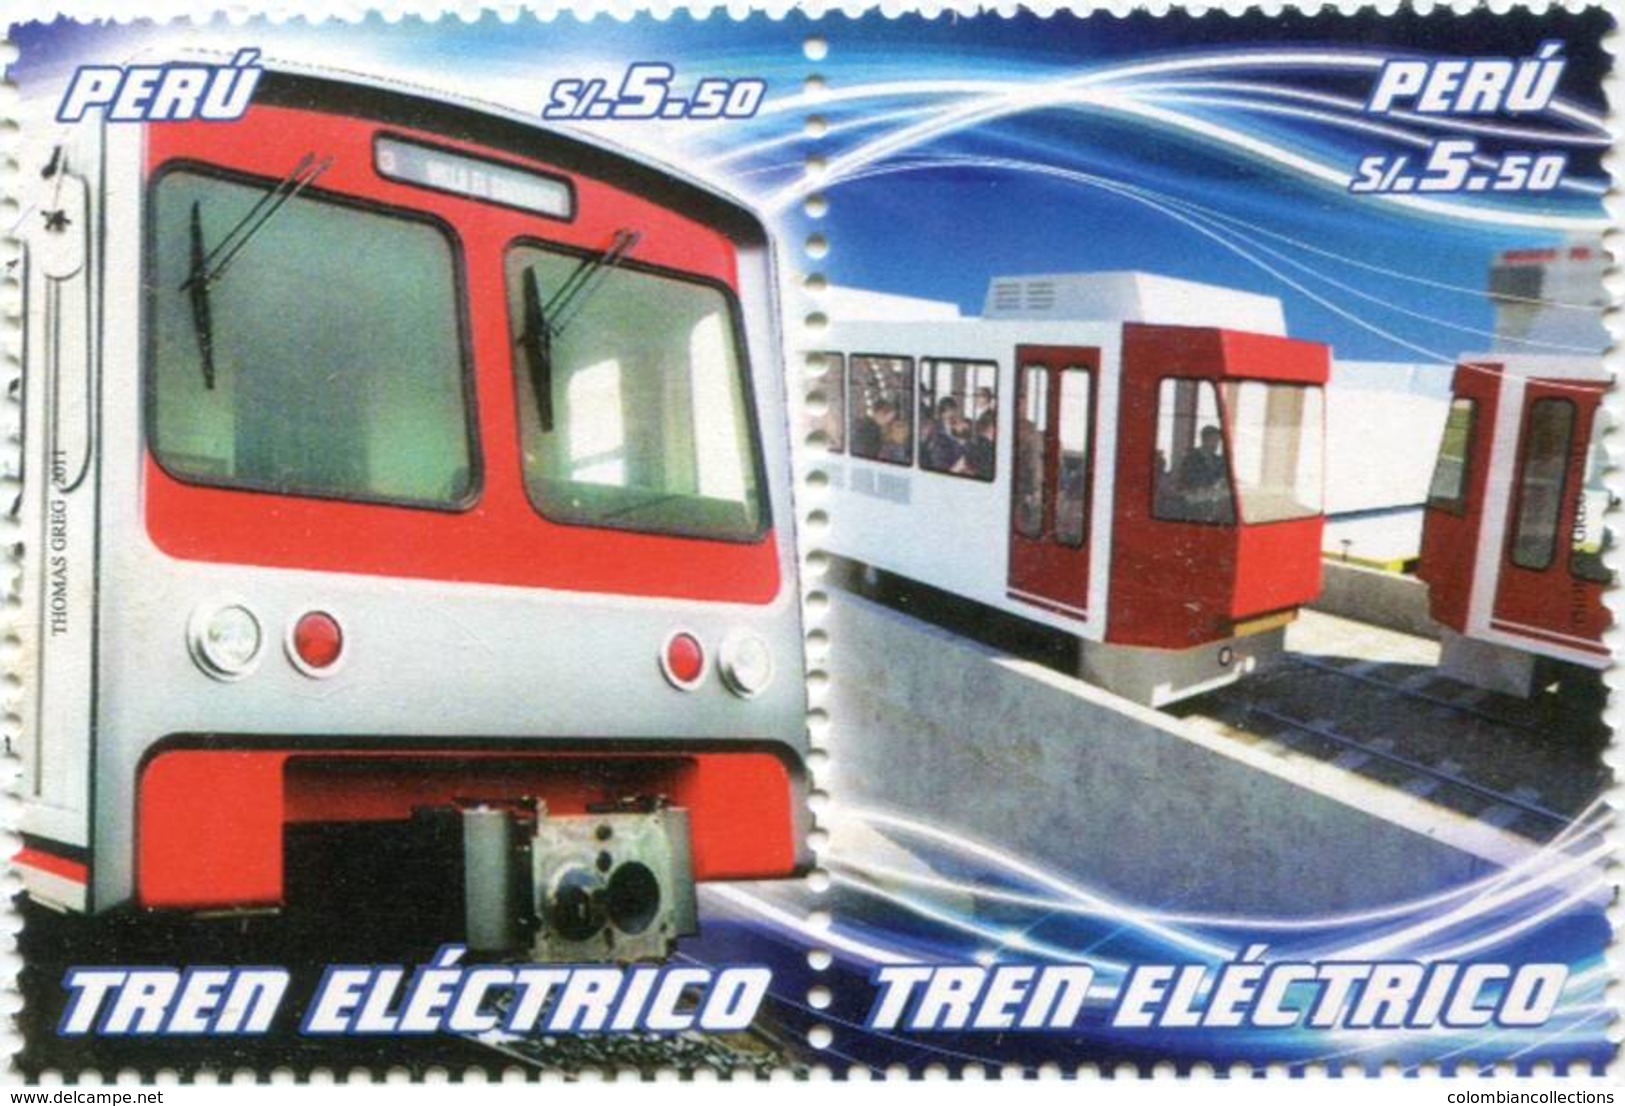 Lote P2011-9, Peru, 2011, Sello, Stamp, 2, V, Bus Y Tren Electico, Bus And Electric Train - Perú